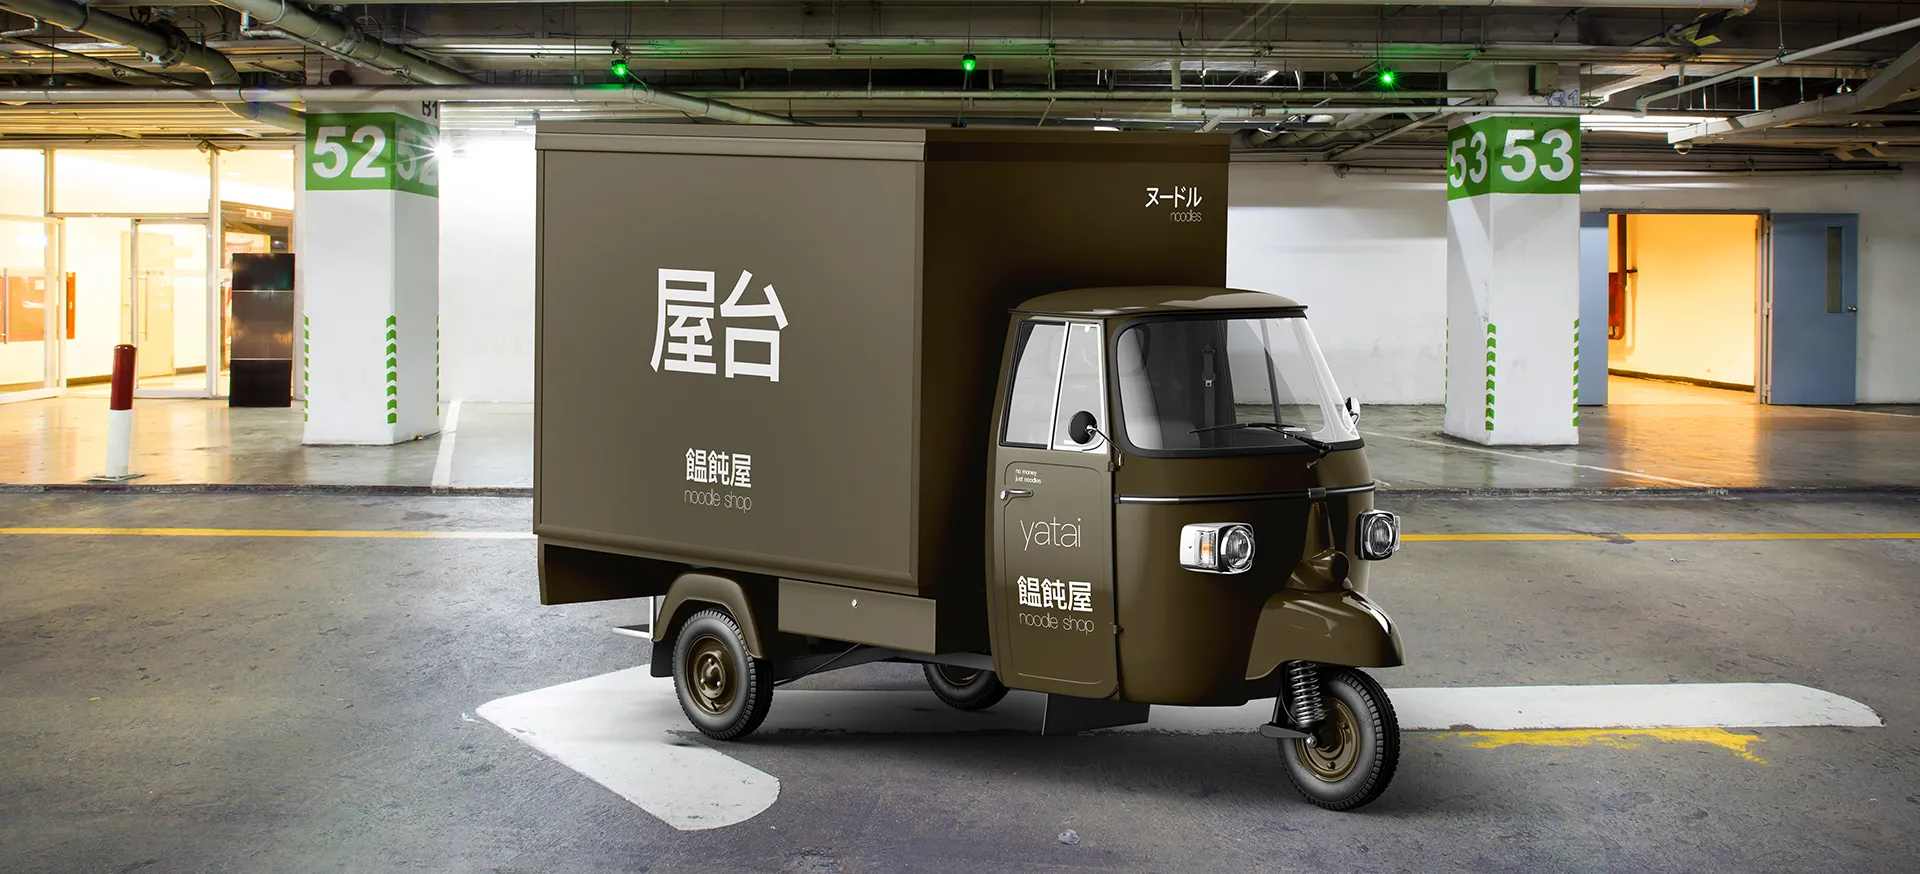 green, Japanese street food van graphics, 3 wheel Japanese van, noddle shop Japanese street food cuisine